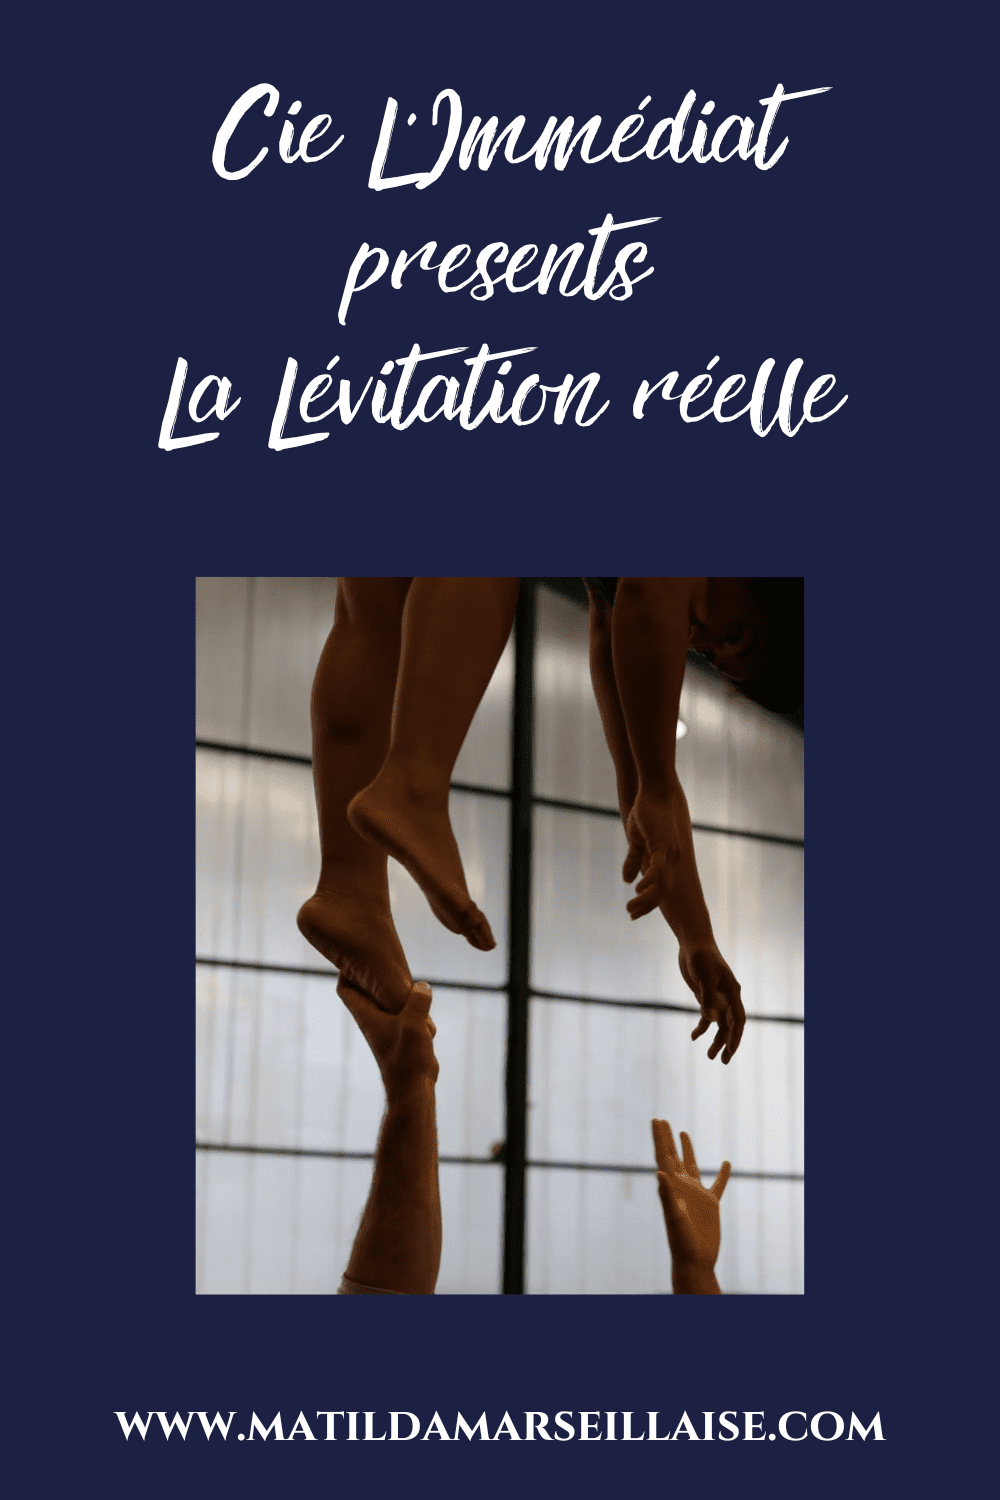 Cie L'immédiat presents their roving performance La Lévitation Réelle at WOMADelaide